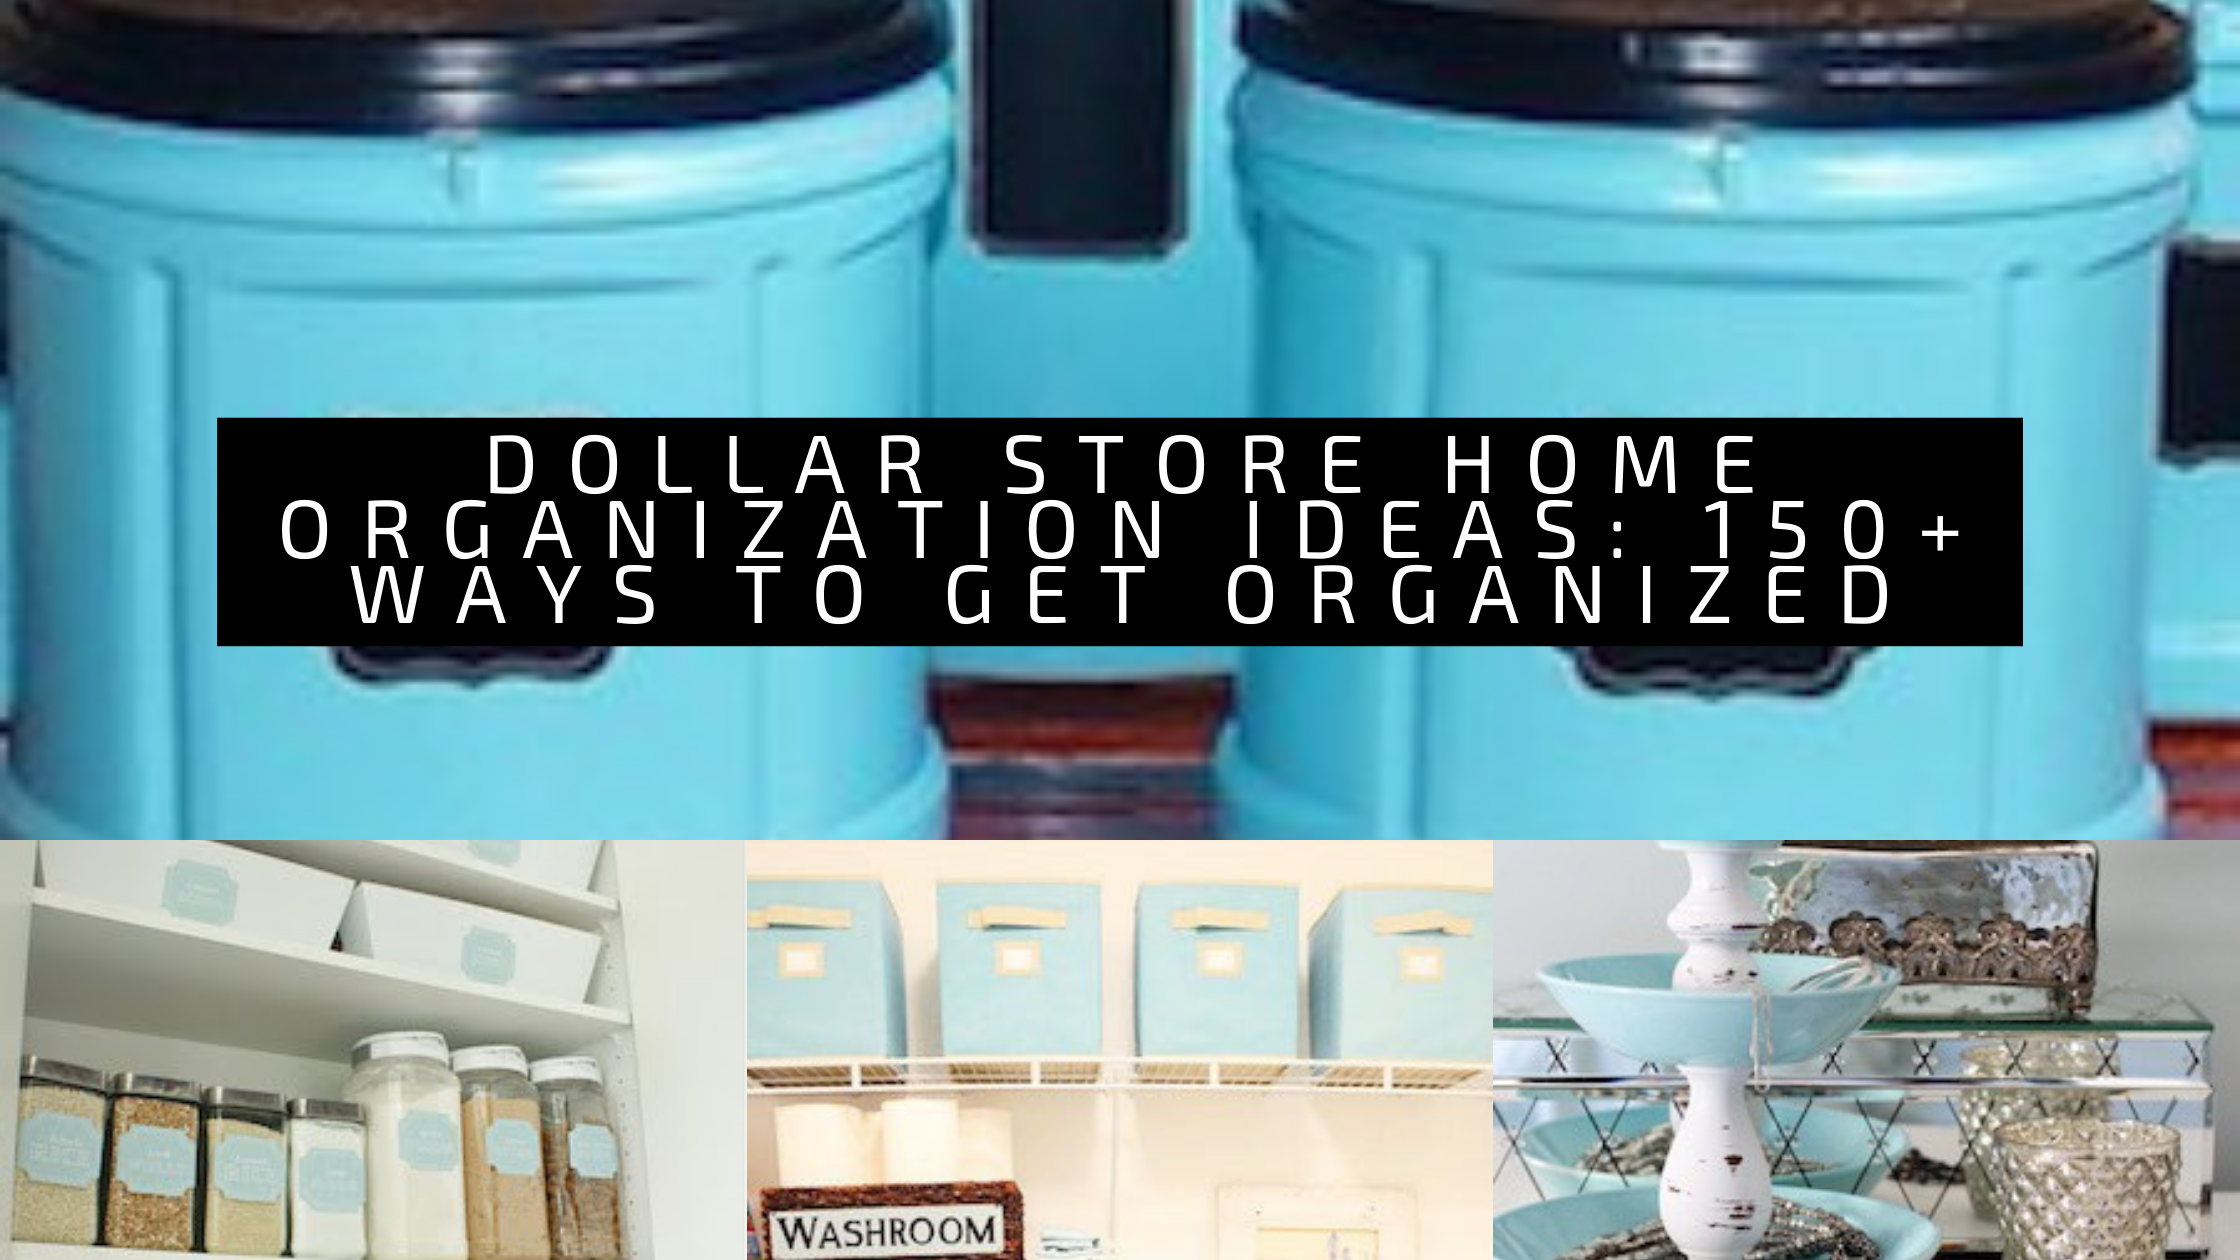 Dollar Store Home Organization Ideas: 150+ Ways to Get Organized 29